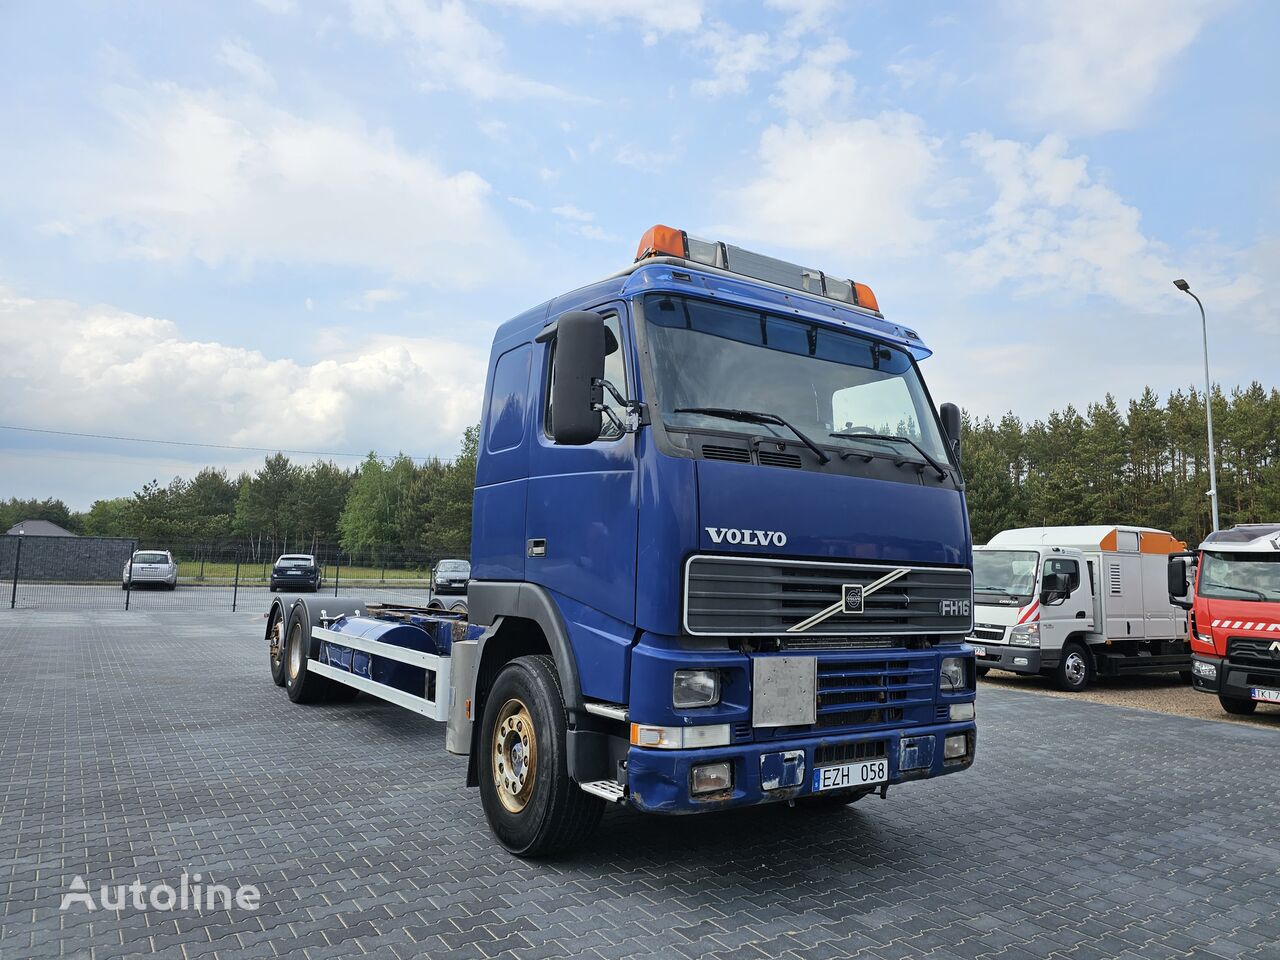 грузовик шасси Volvo FH 16 470 KM 6x2 low mileage 229700 km !!!!